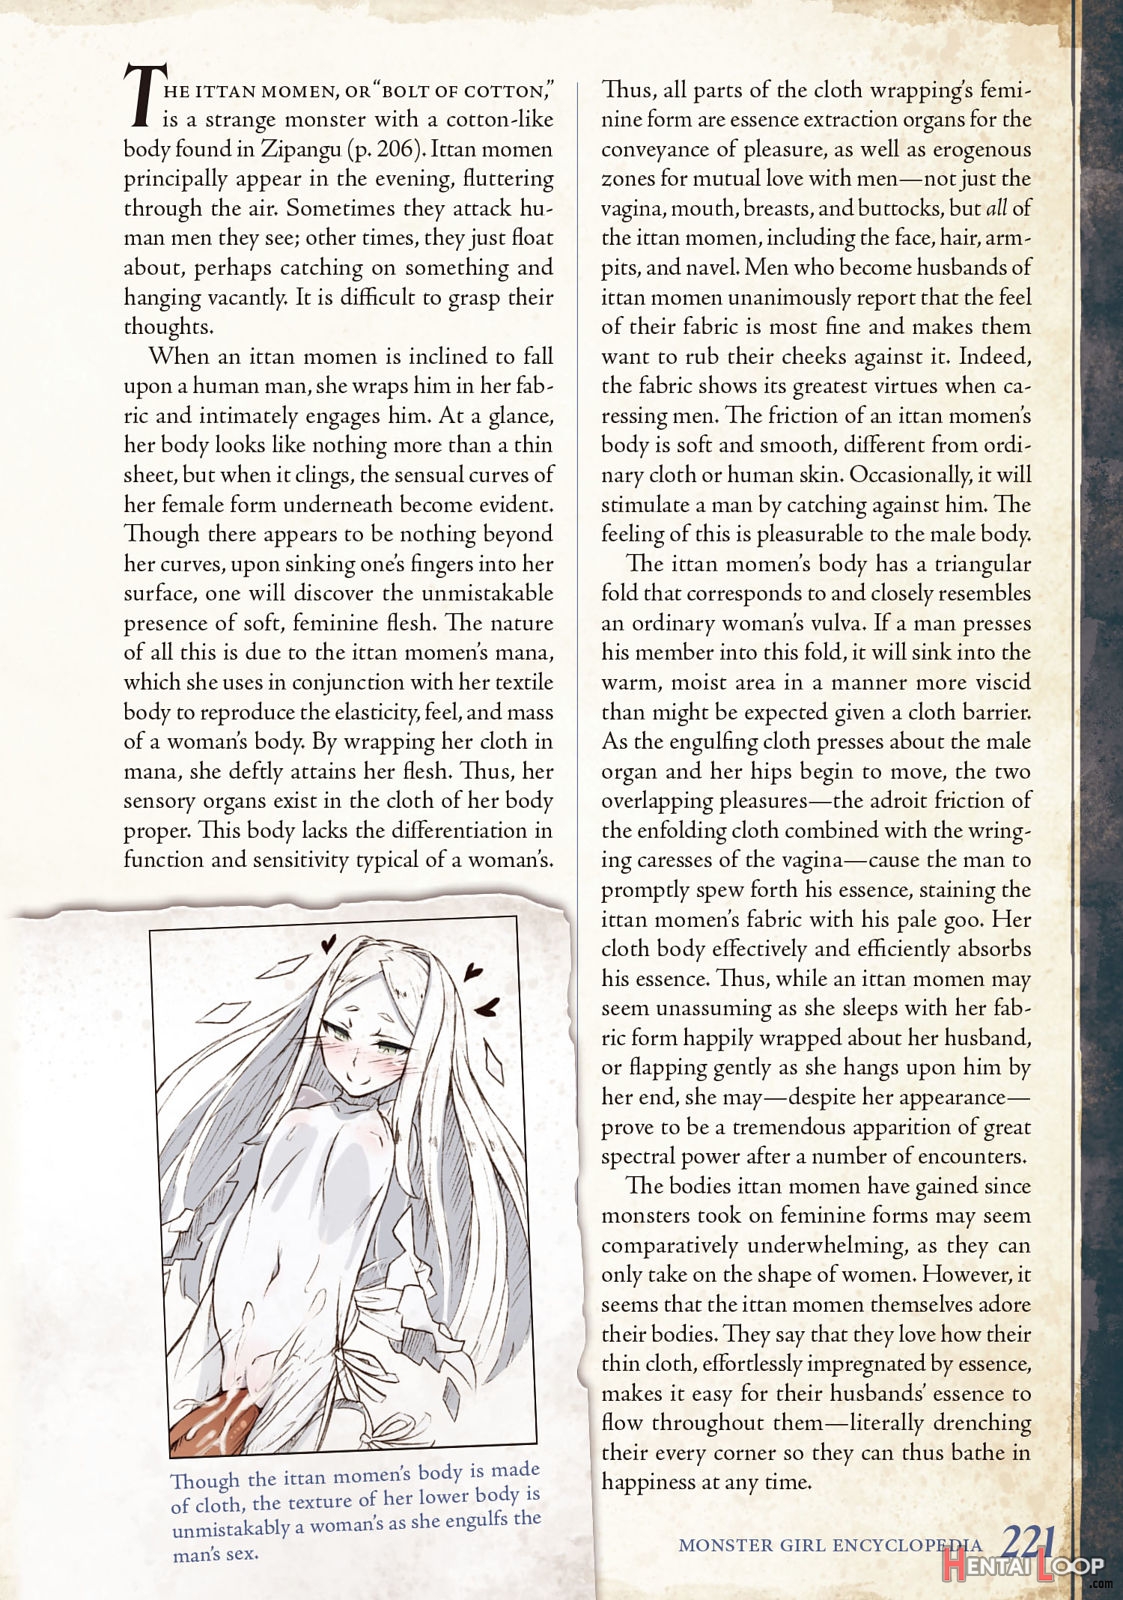 Monster Girl Encyclopedia Vol. 2 page 222